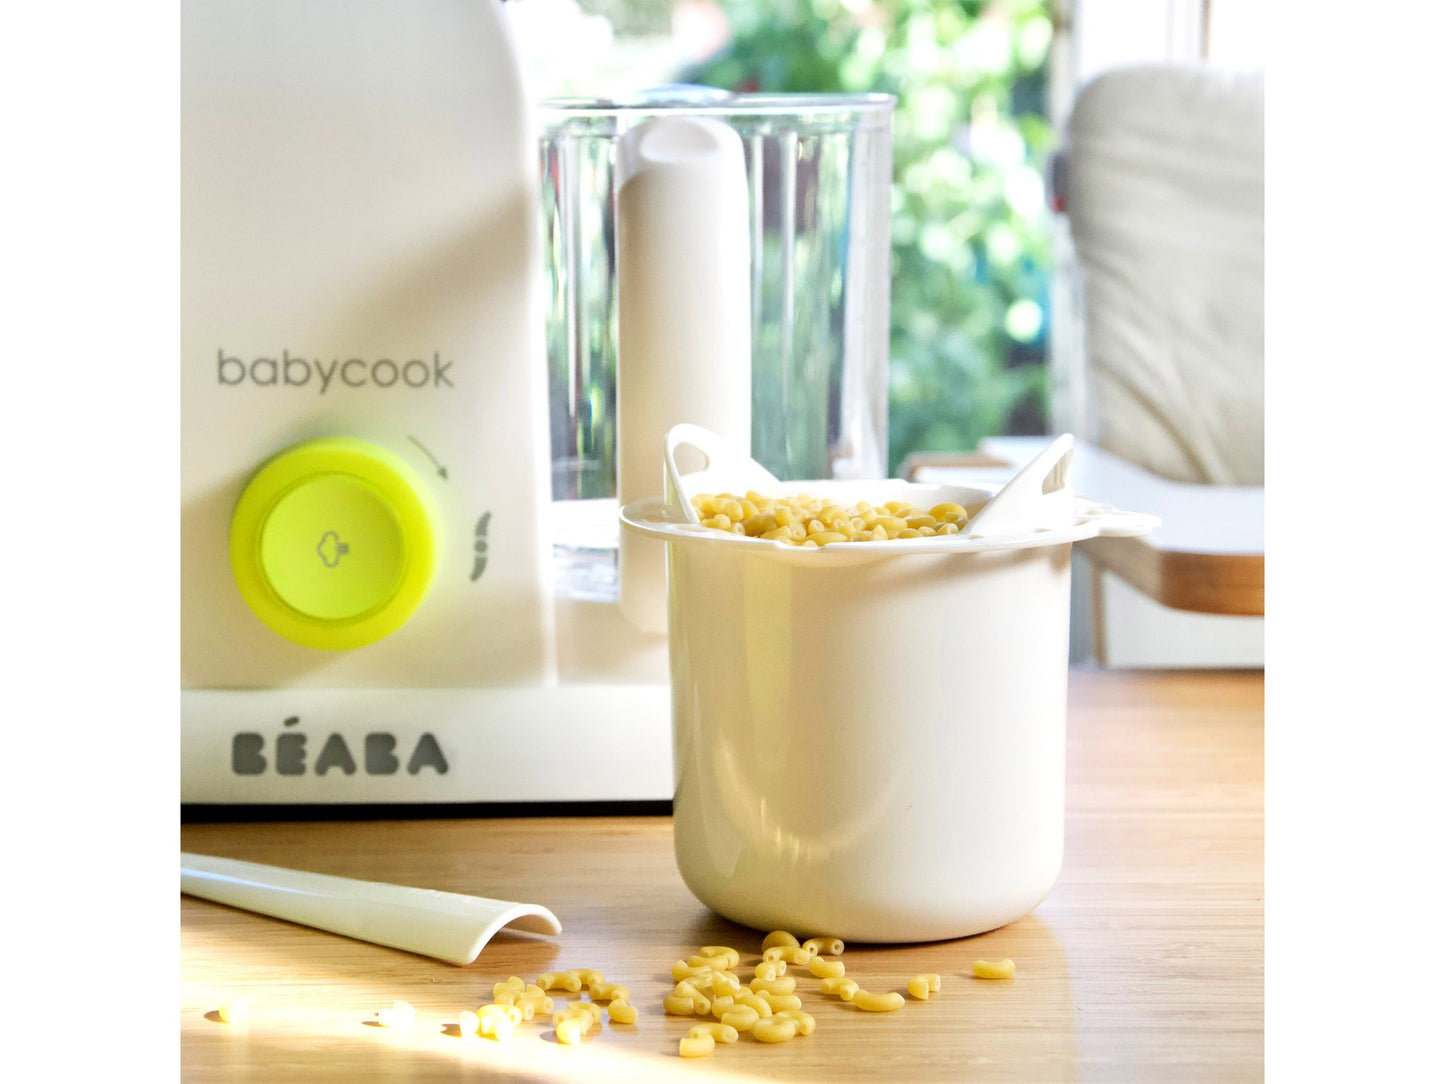 Beaba Pasta/Rice Cooker for Babycook® or Babycook® Plus - White